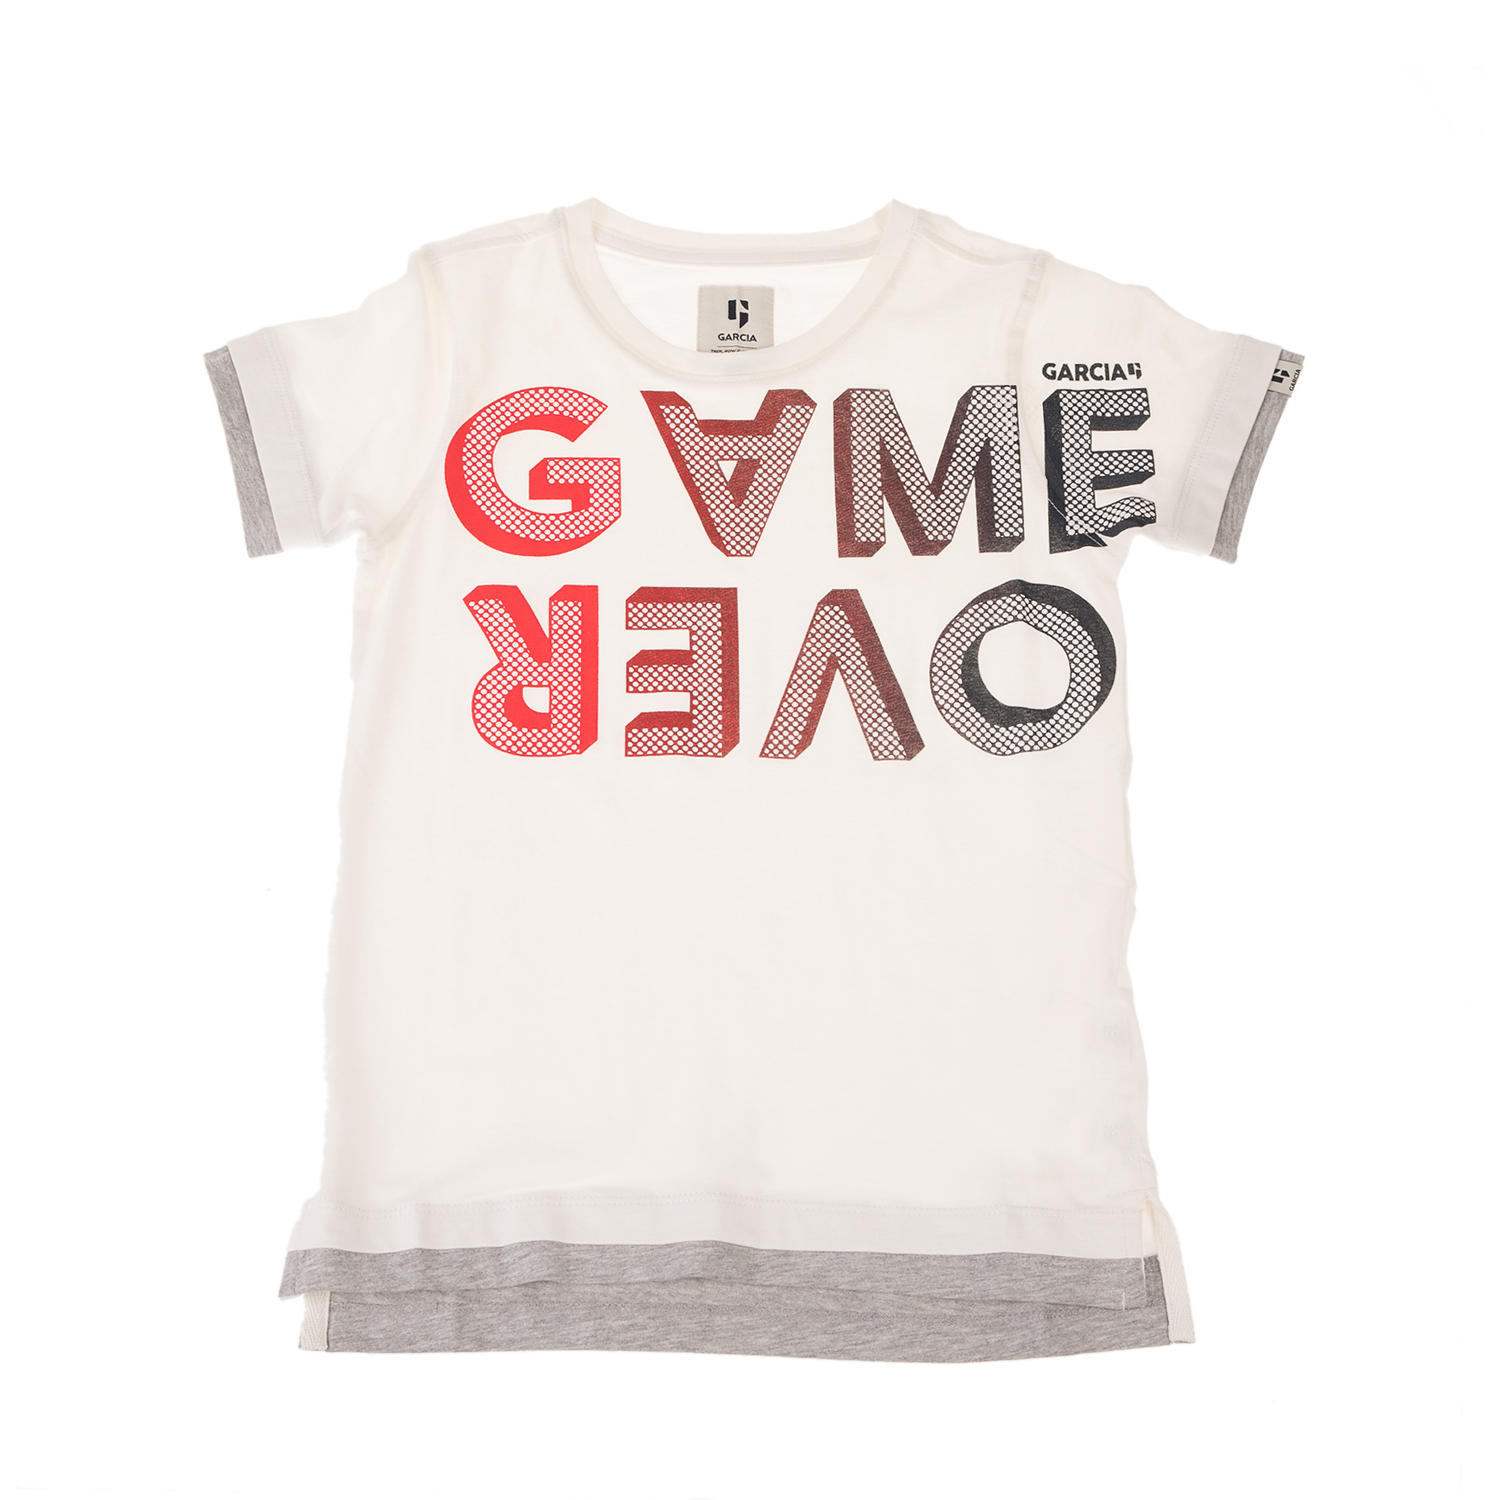 GARCIA JEANS Παιδικό t-shirt για αγόρια GARCIA JEANS εκρού